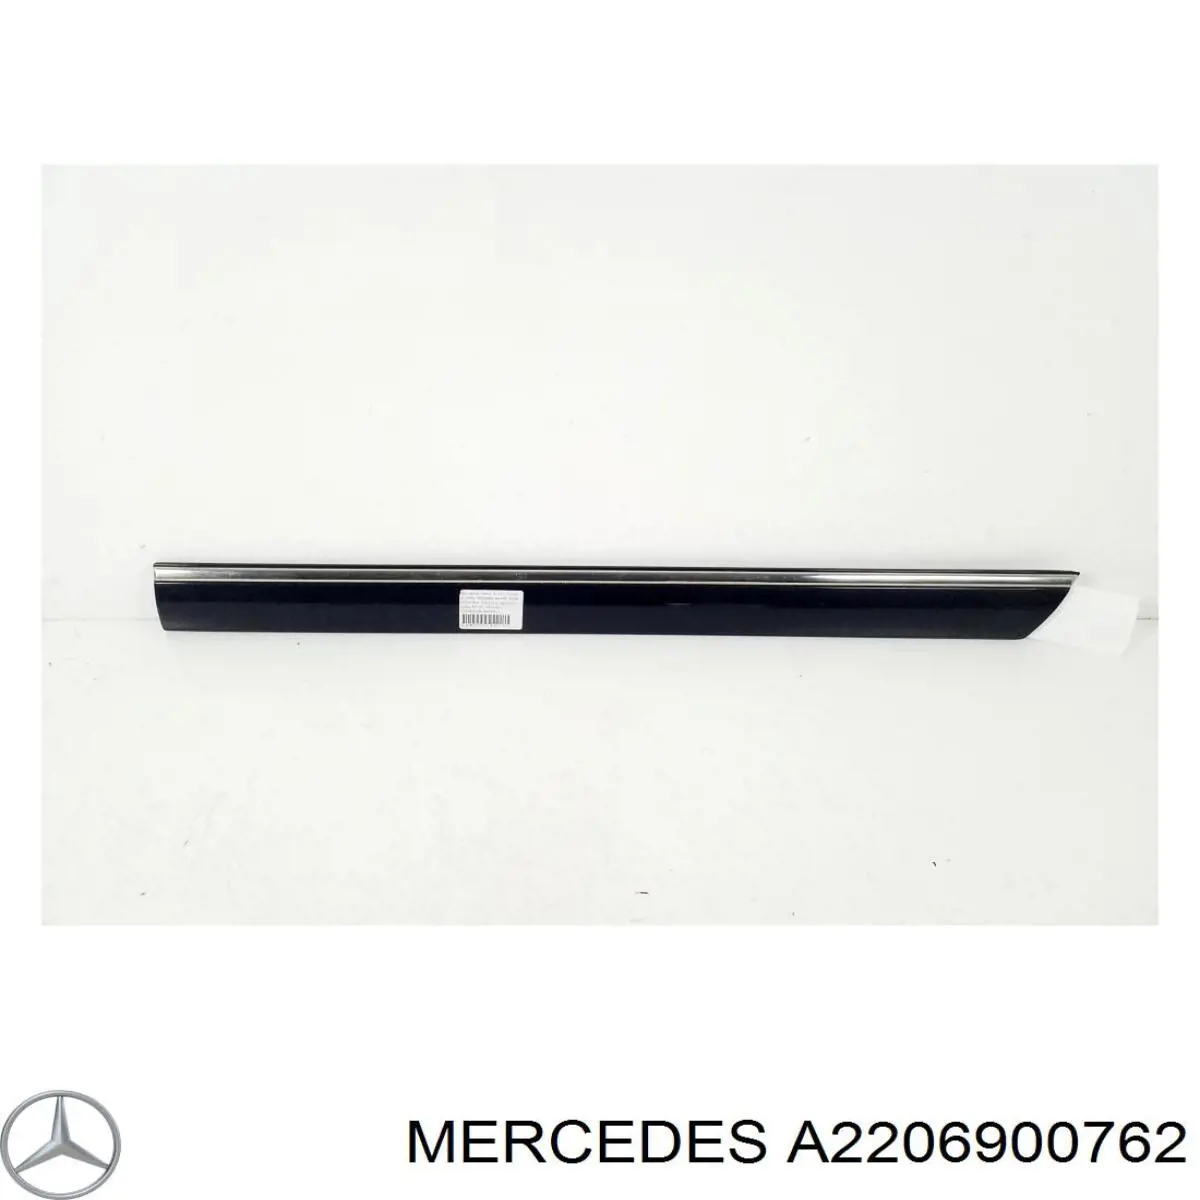 22069007629999 Mercedes moldura da porta traseira esquerda superior